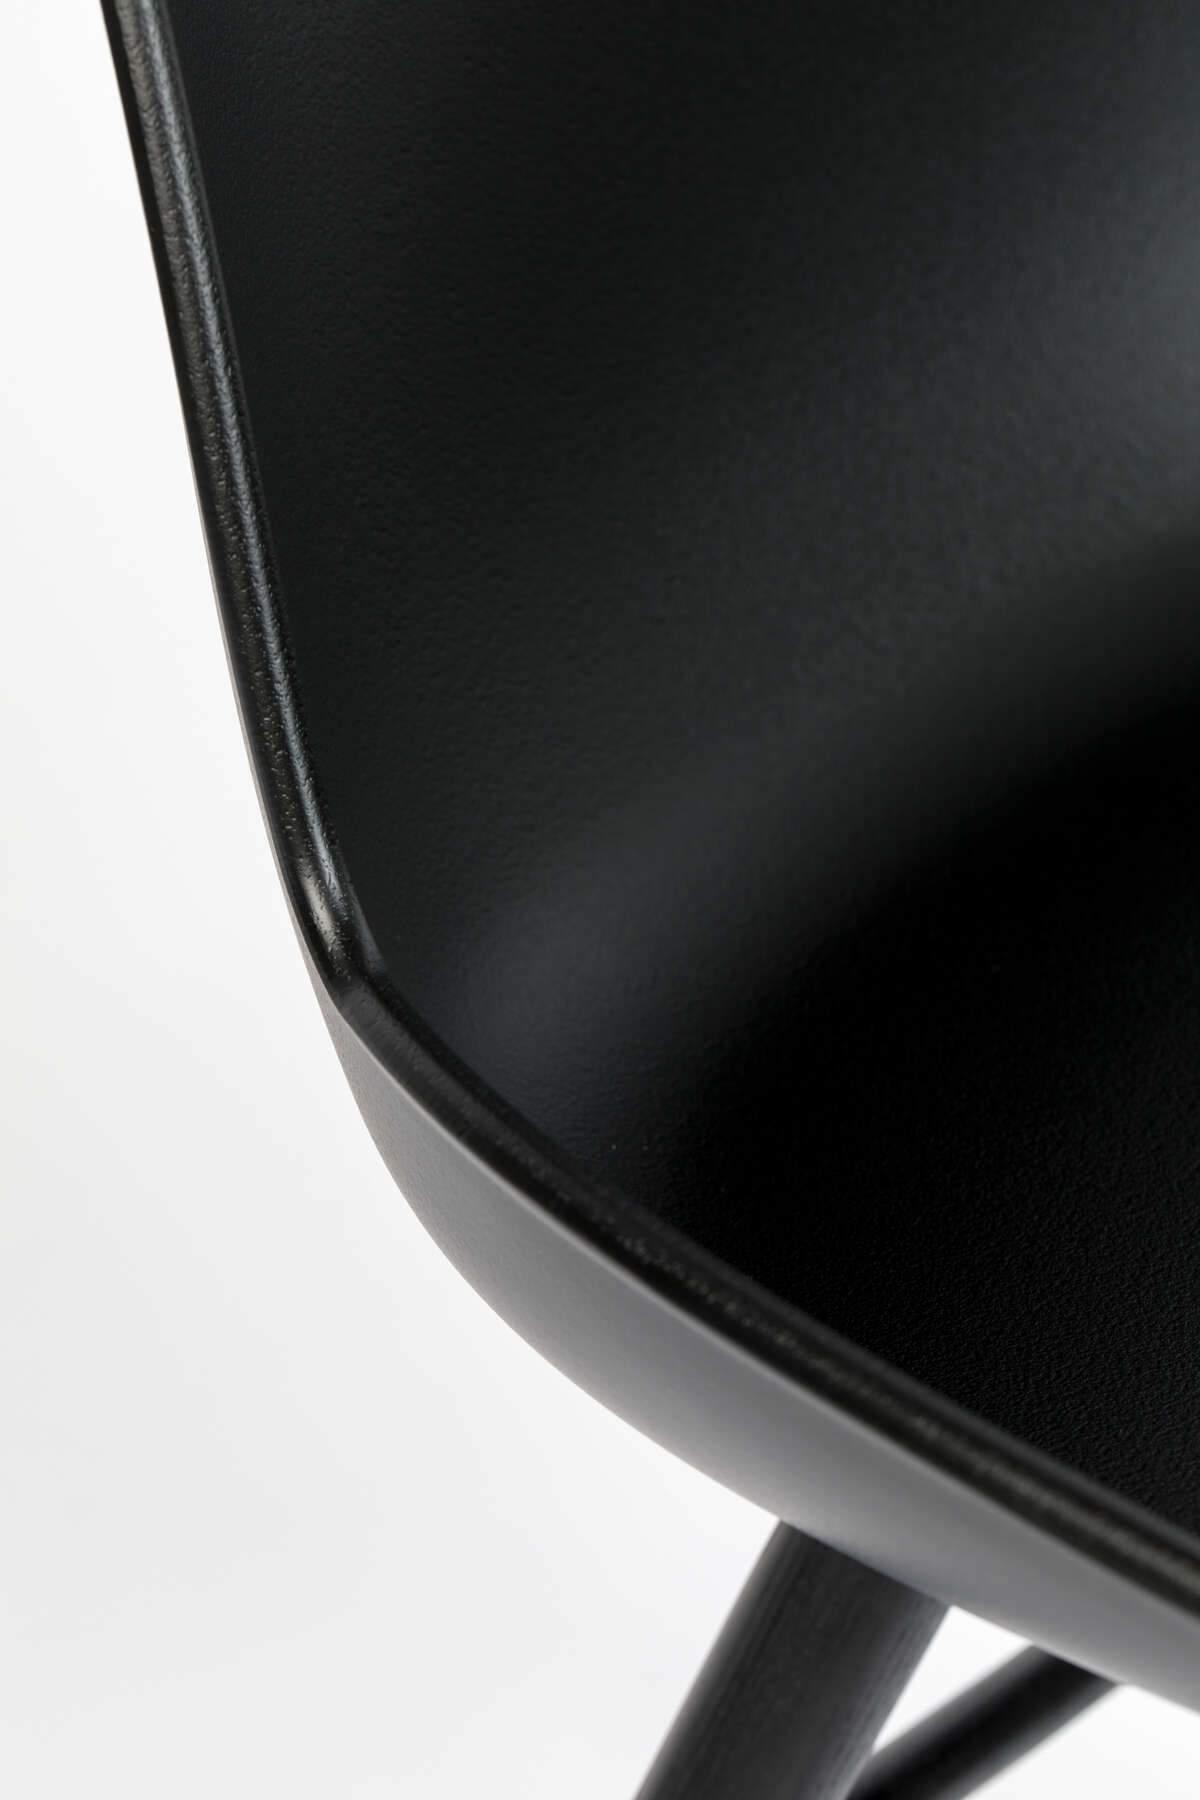 Krzesło ALBERT KUIP czarny Zuiver    Eye on Design